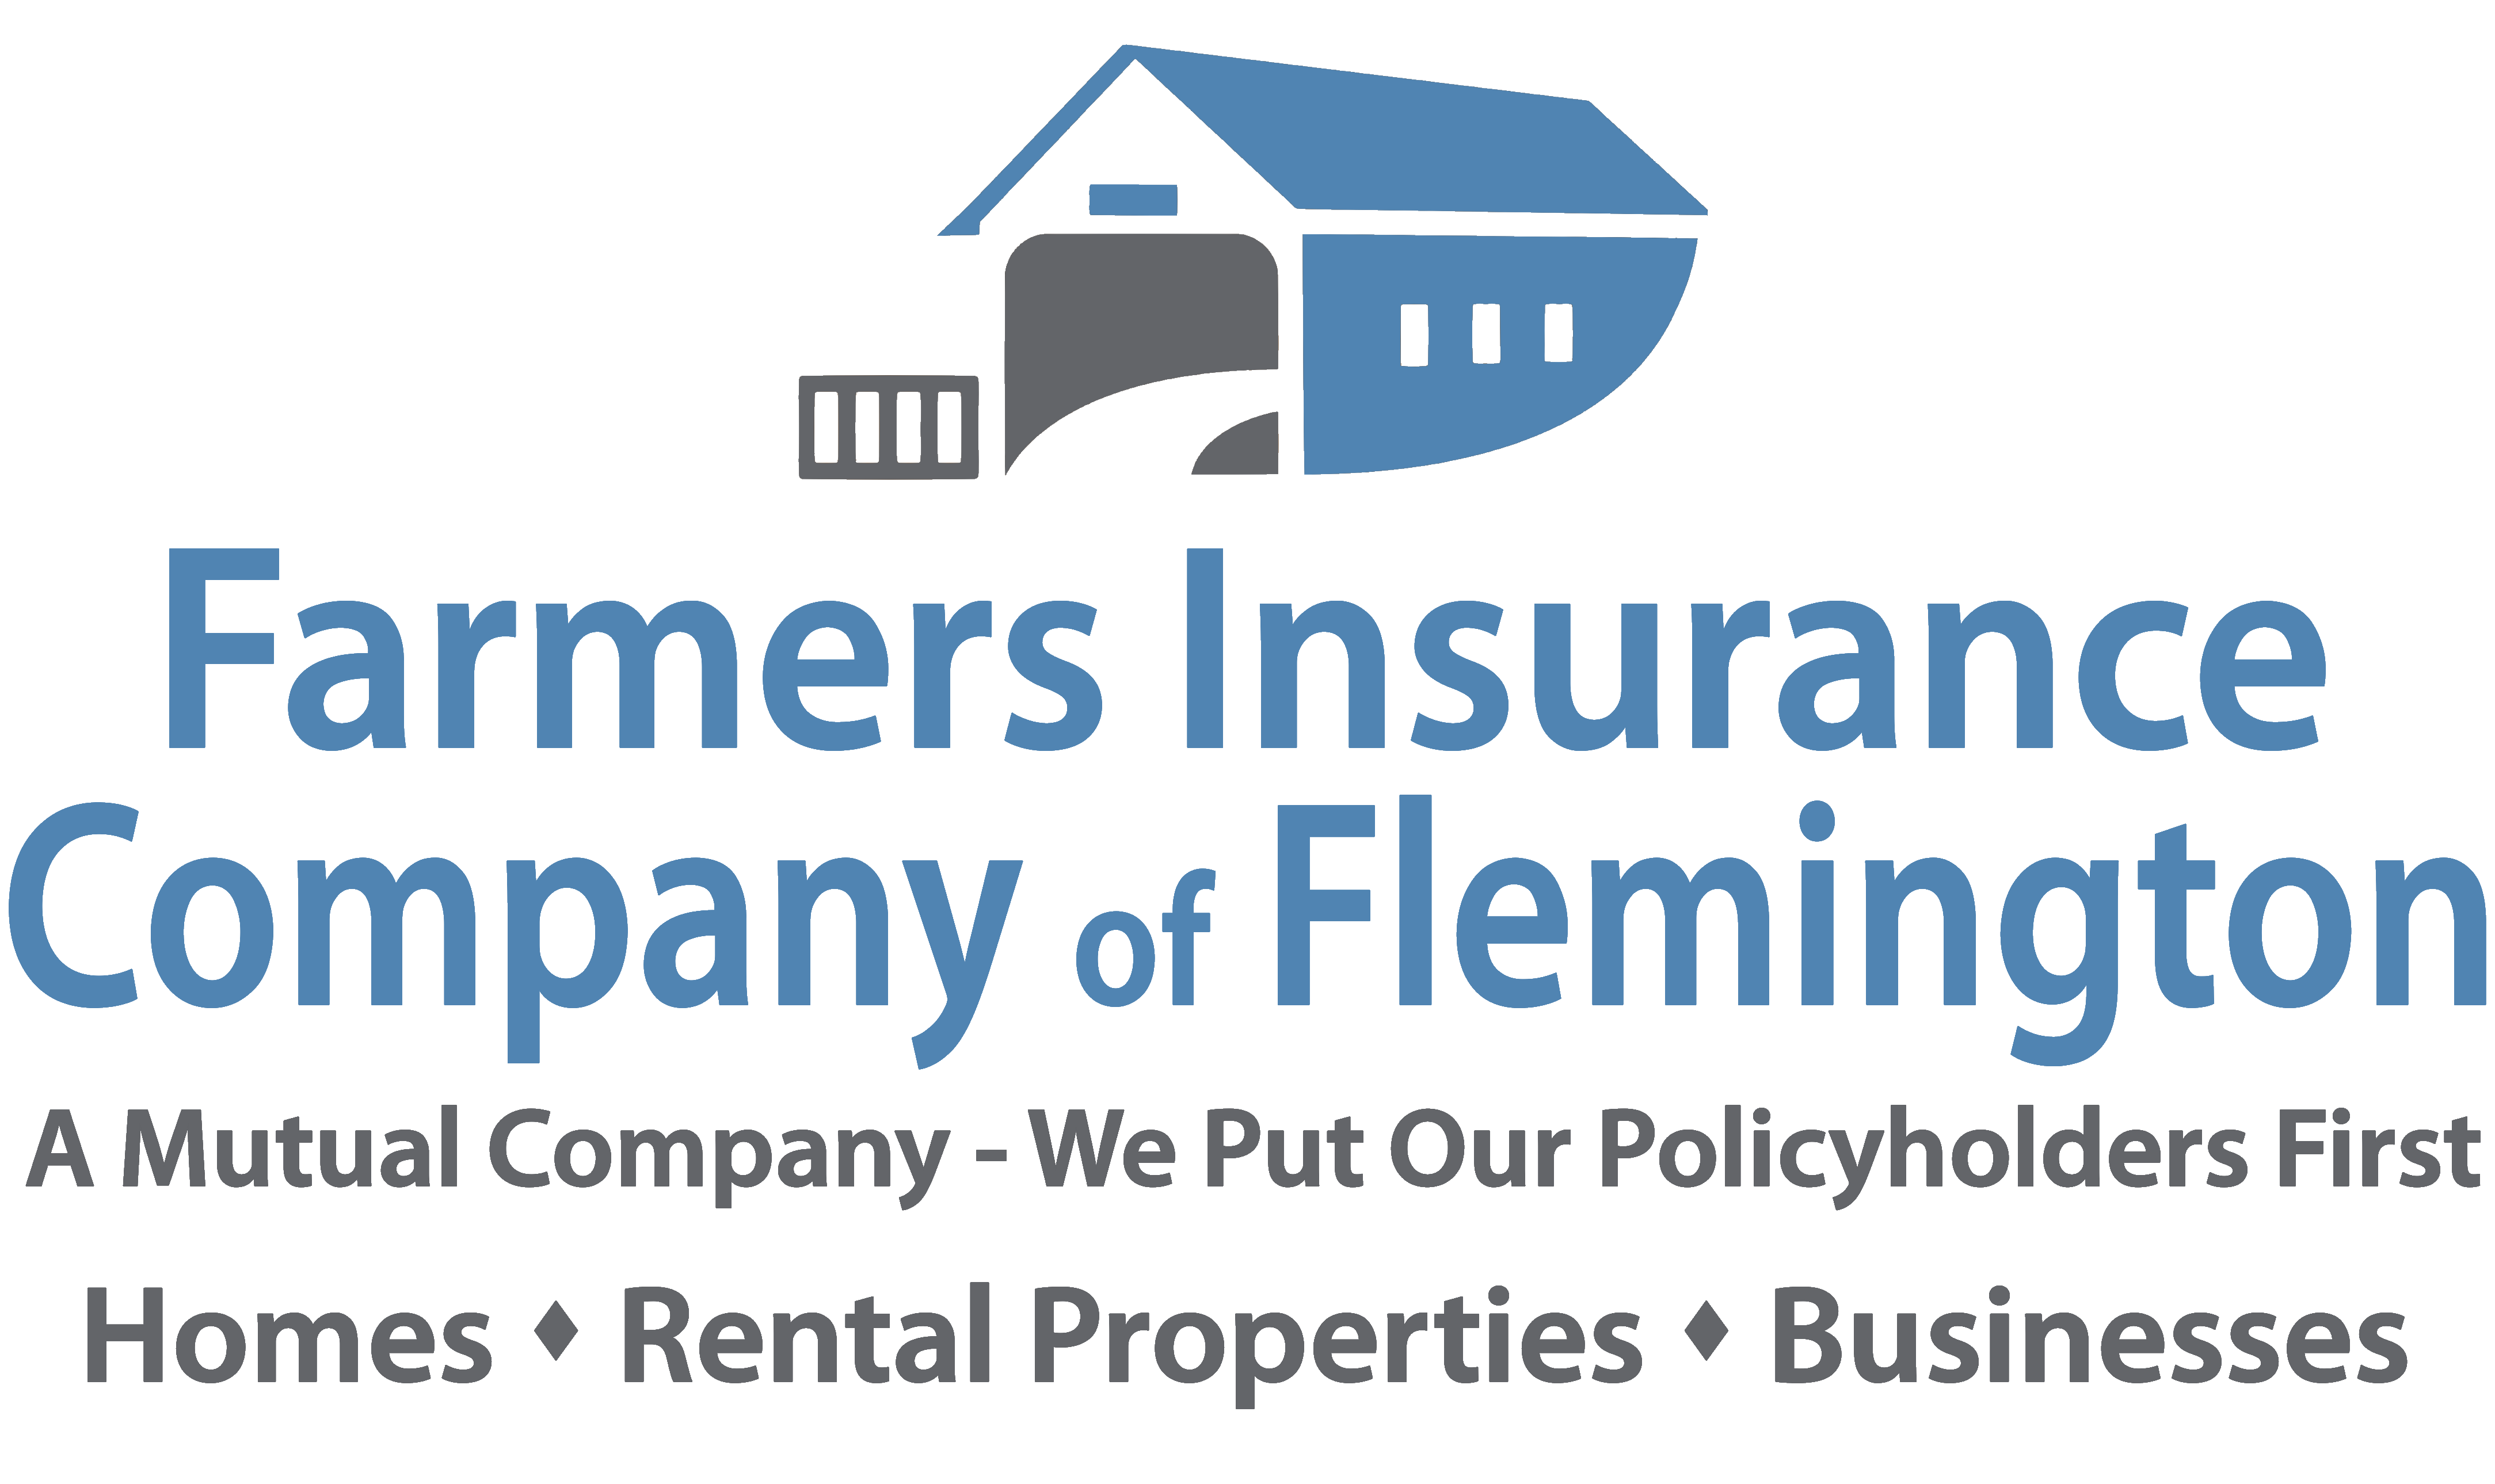 Farmers Insurance Company of Flemington to Sponsor 2021 CEA Turkey Trot